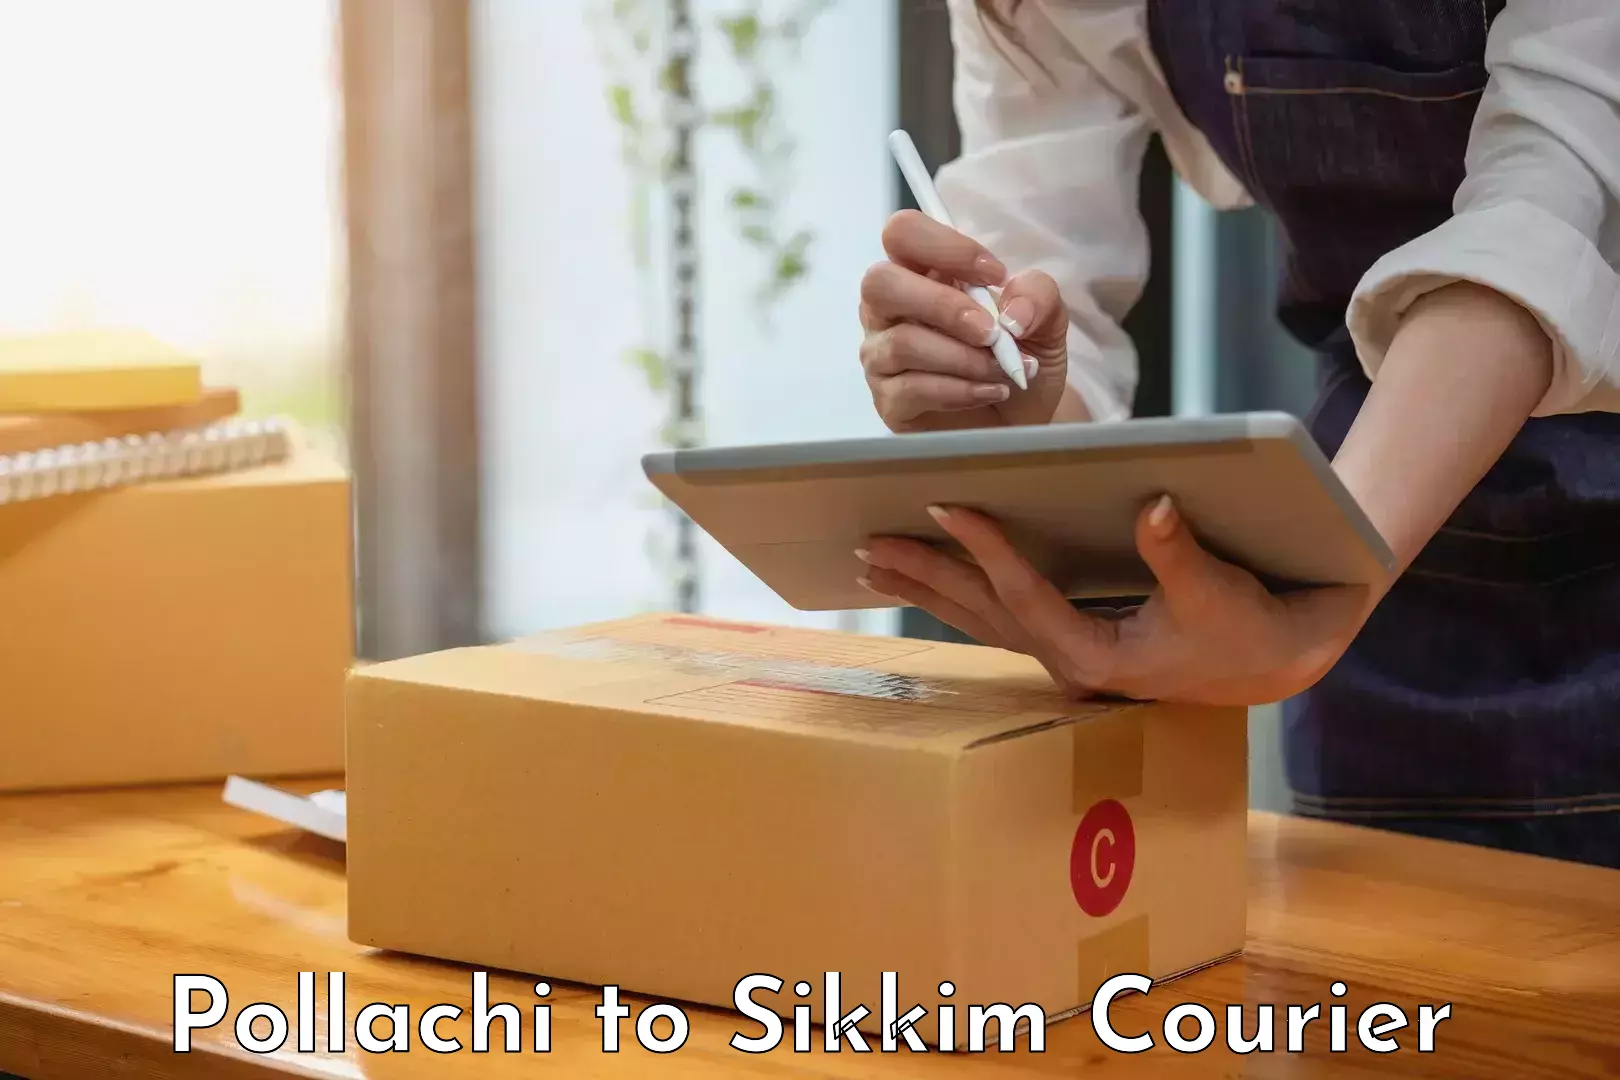 Digital courier platforms Pollachi to Namchi